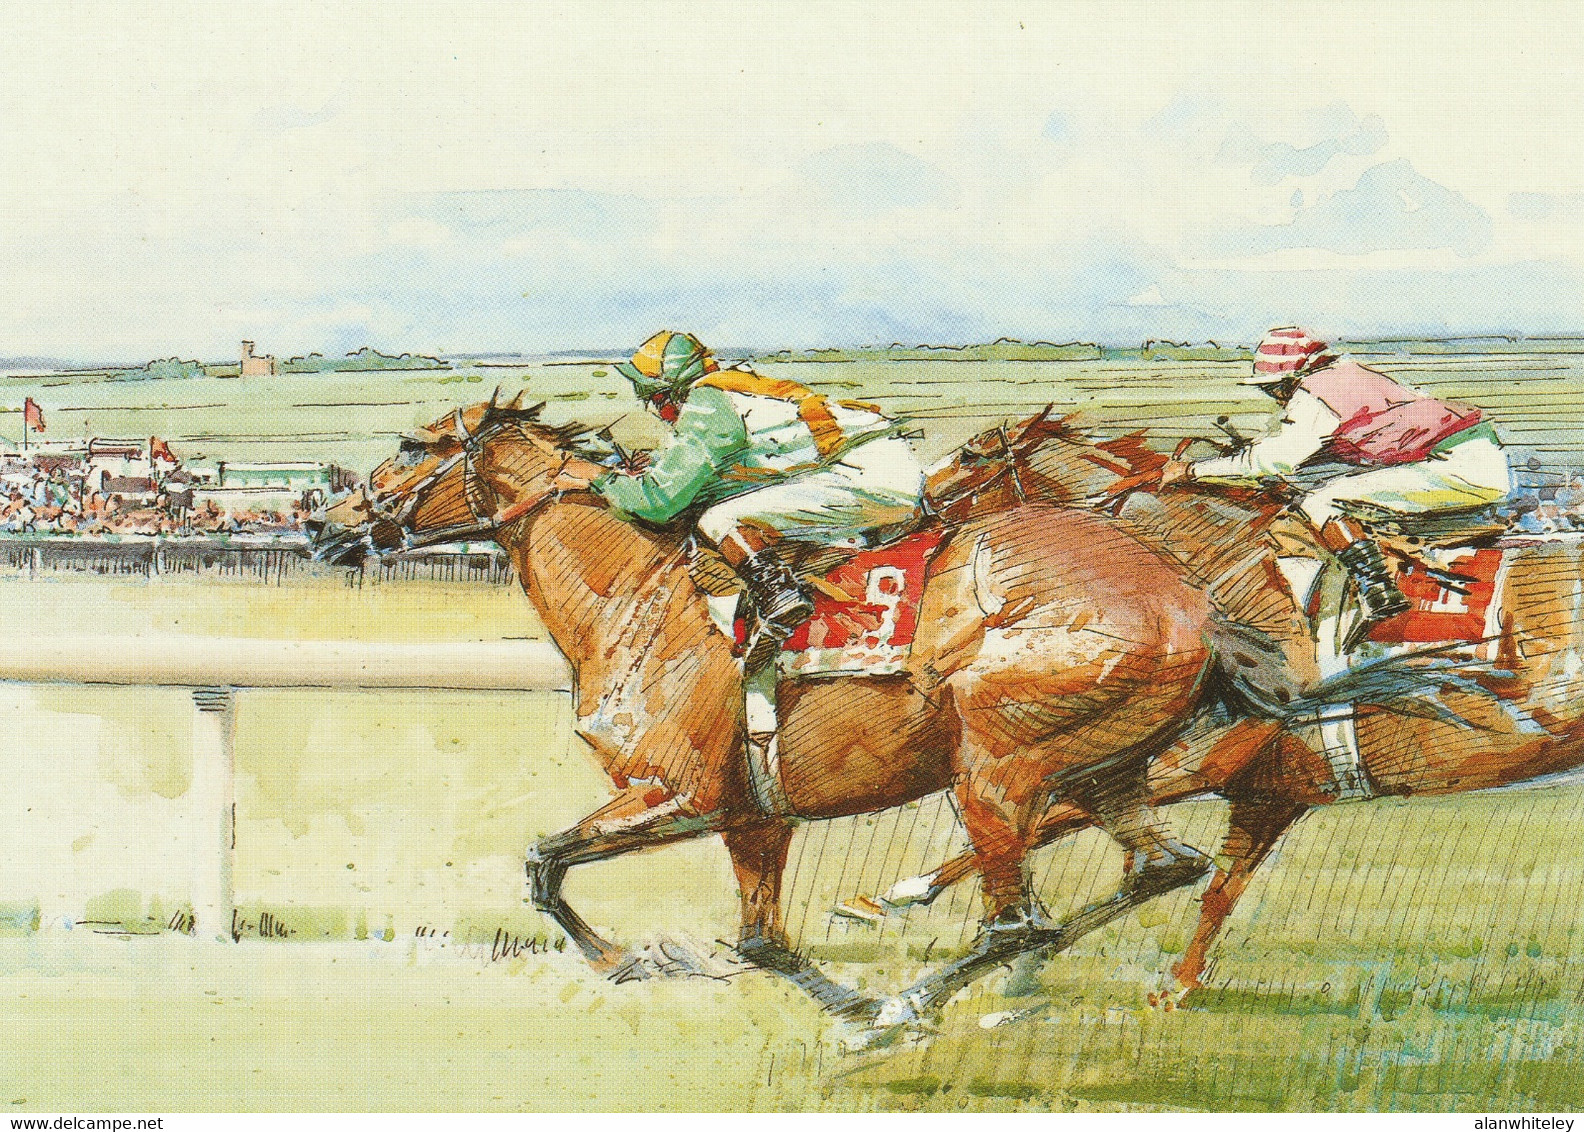 IRELAND 1996 Irish Horse Racing: Set Of 5 Postcards MINT/UNUSED - Entiers Postaux